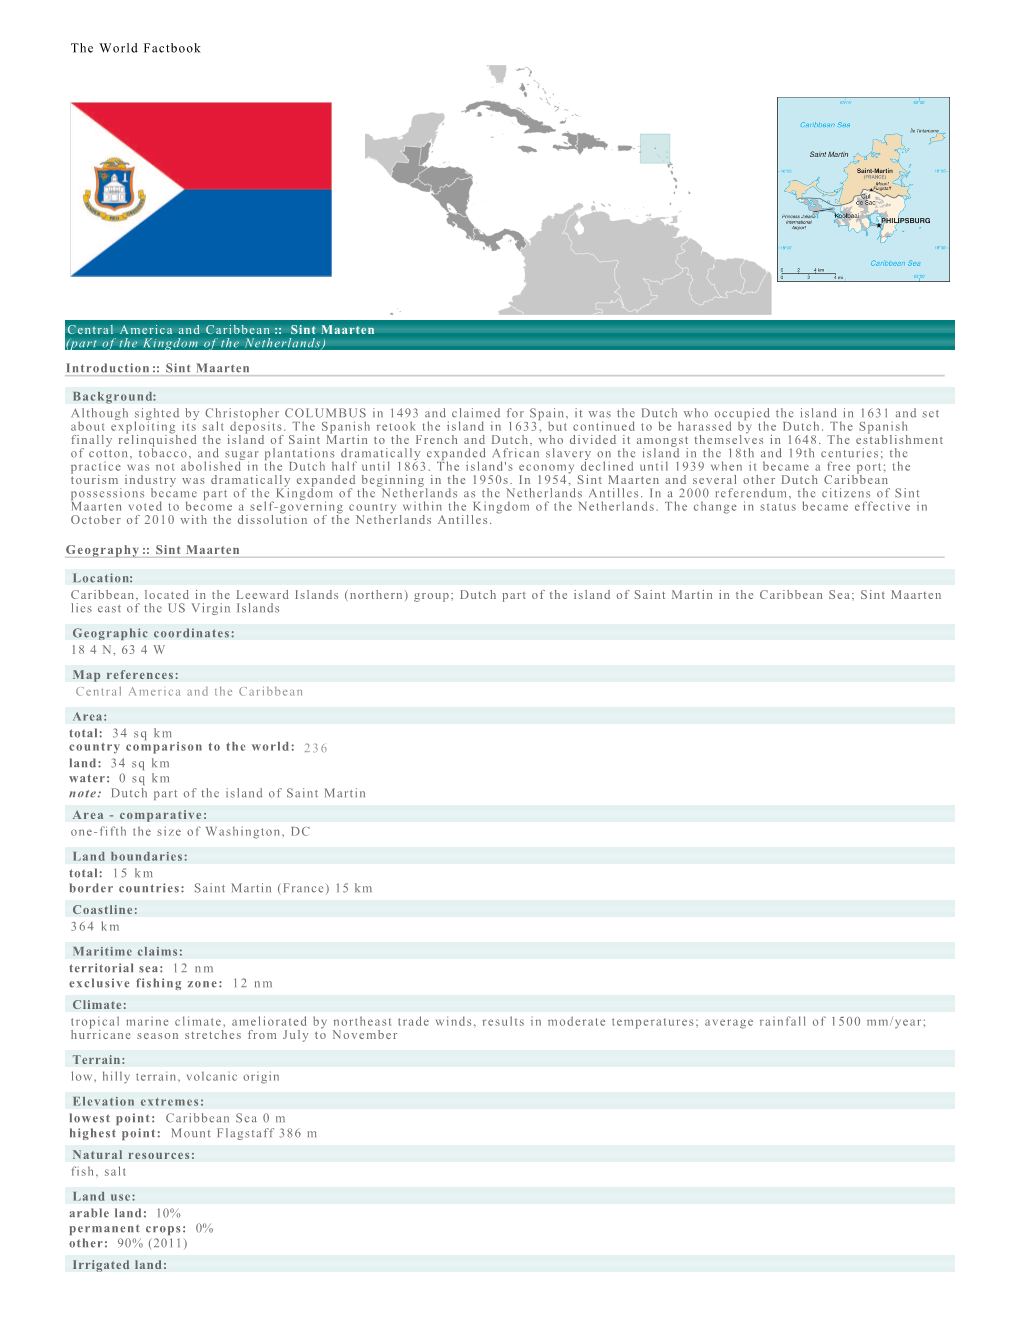 The World Factbook Central America and Caribbean :: Sint Maarten